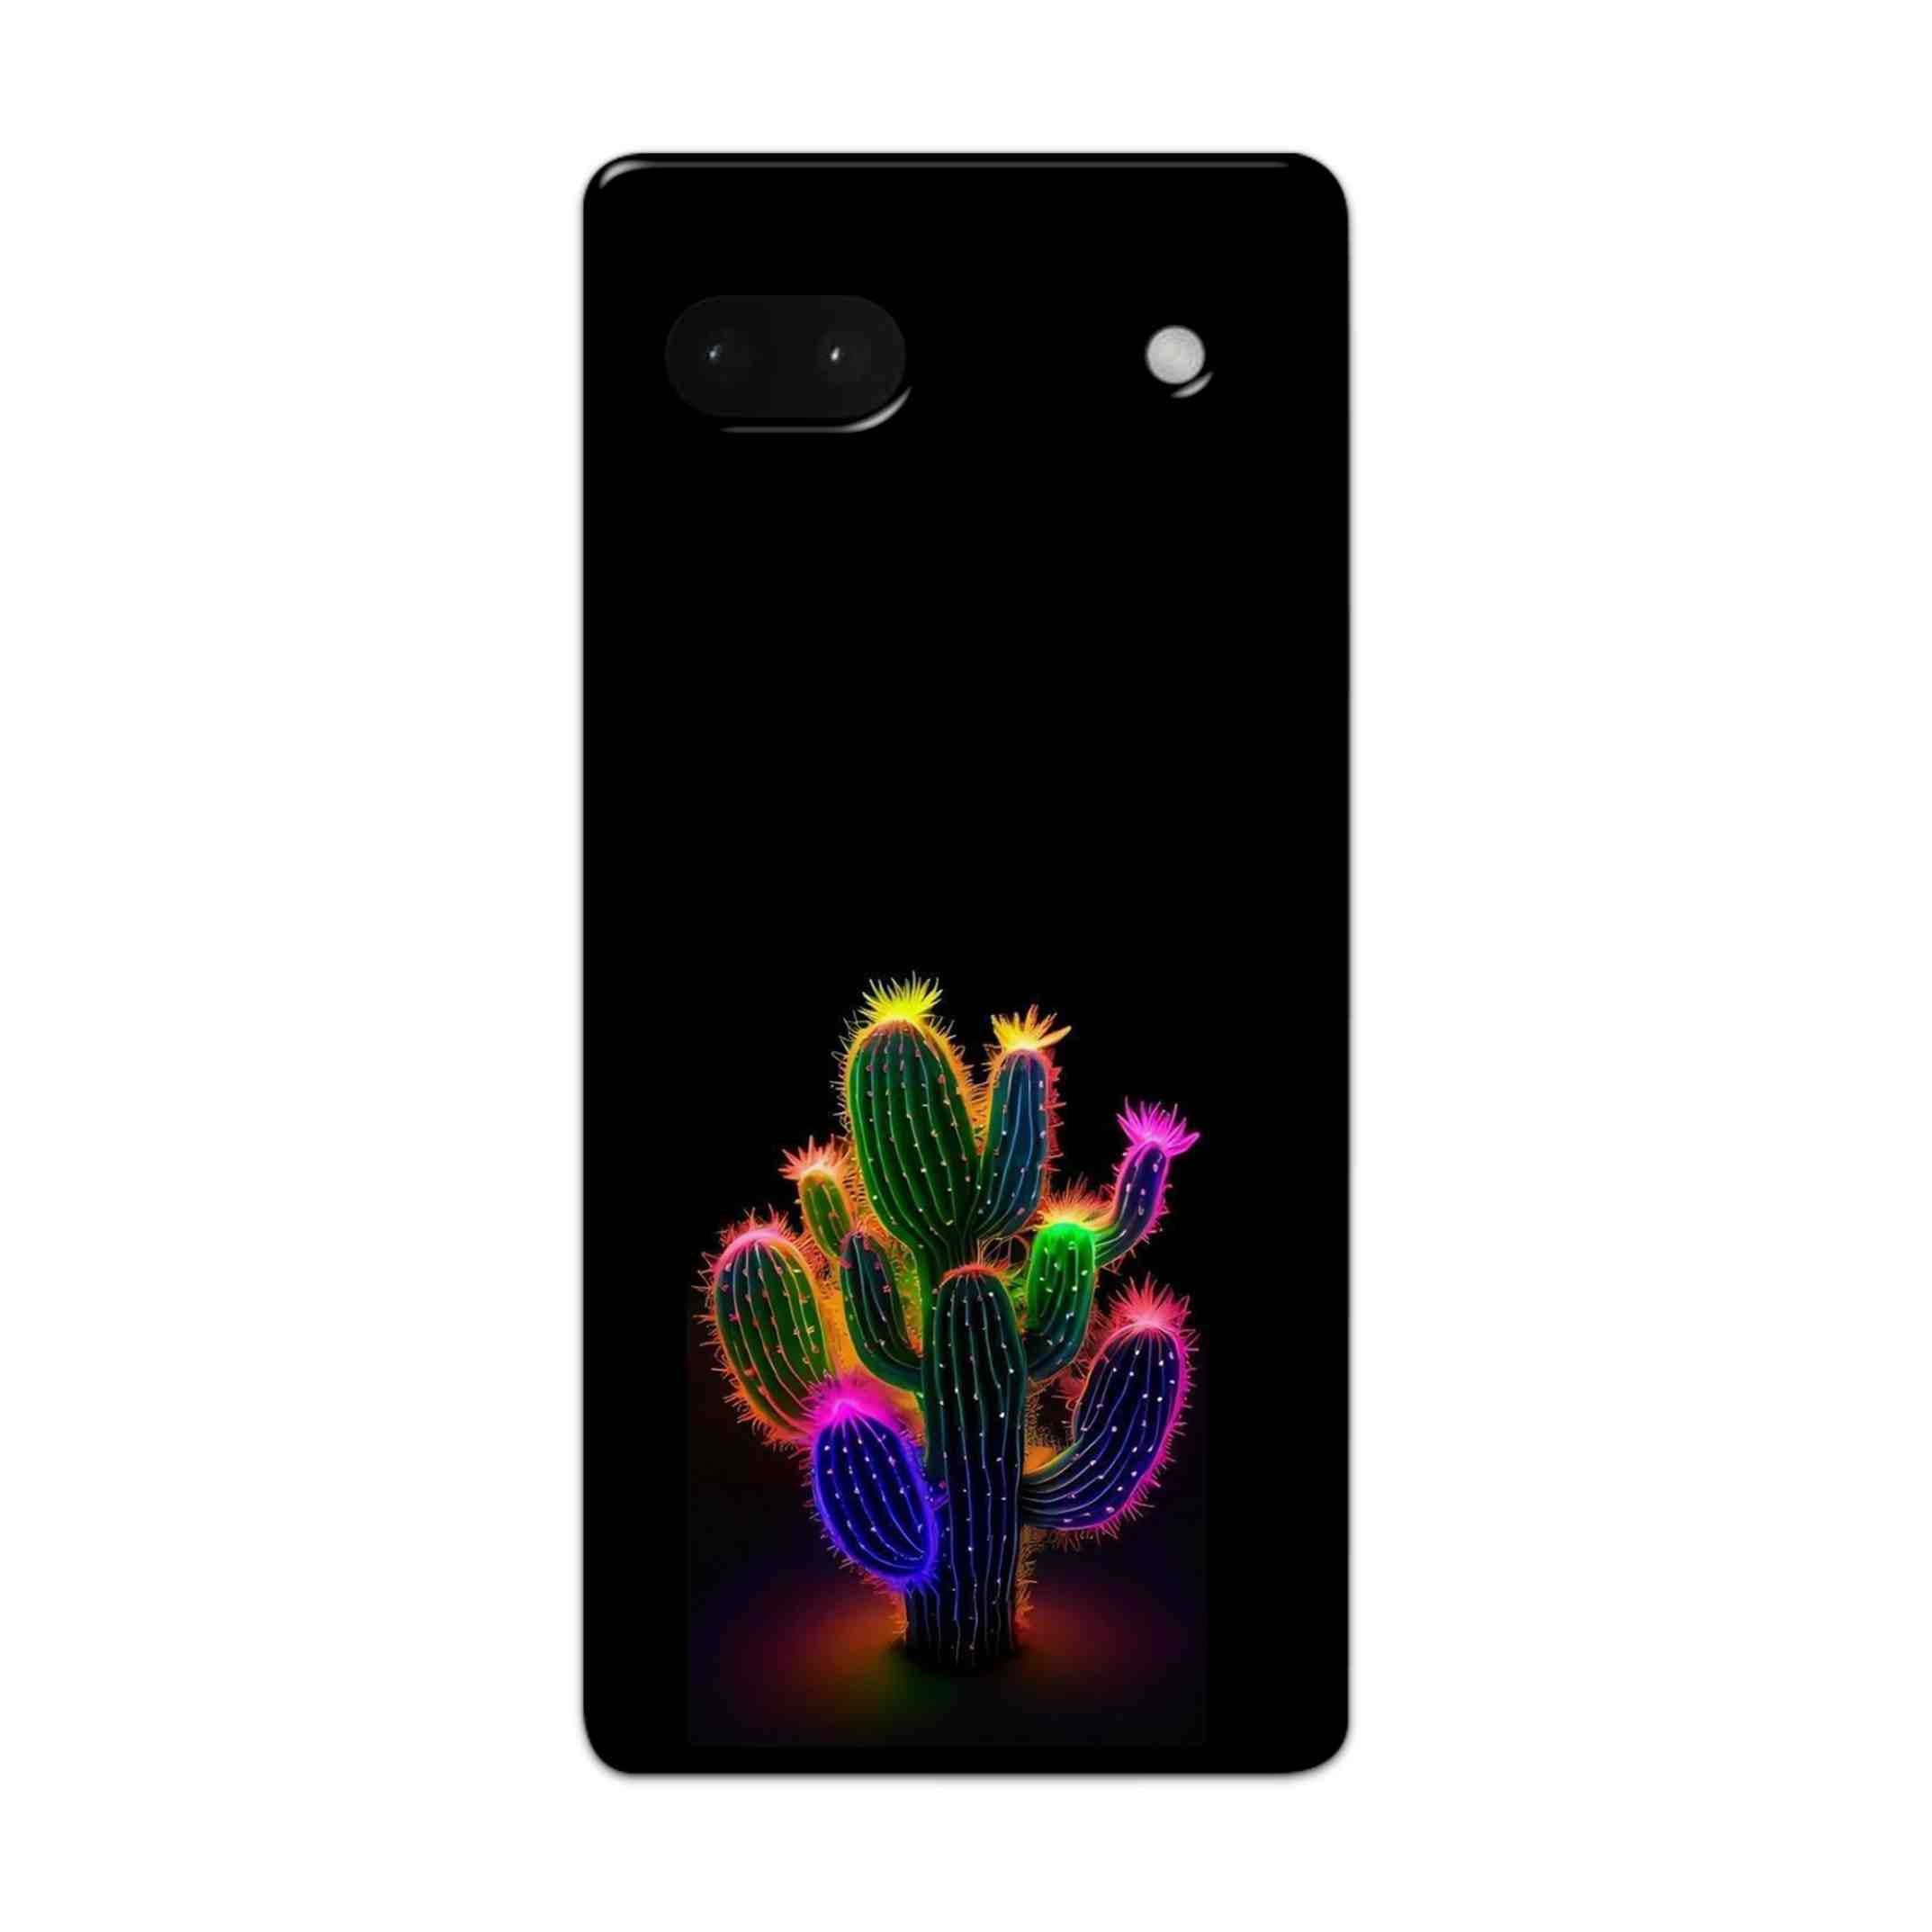 Buy Neon Flower Hard Back Mobile Phone Case Cover For Google Pixel 6a Online